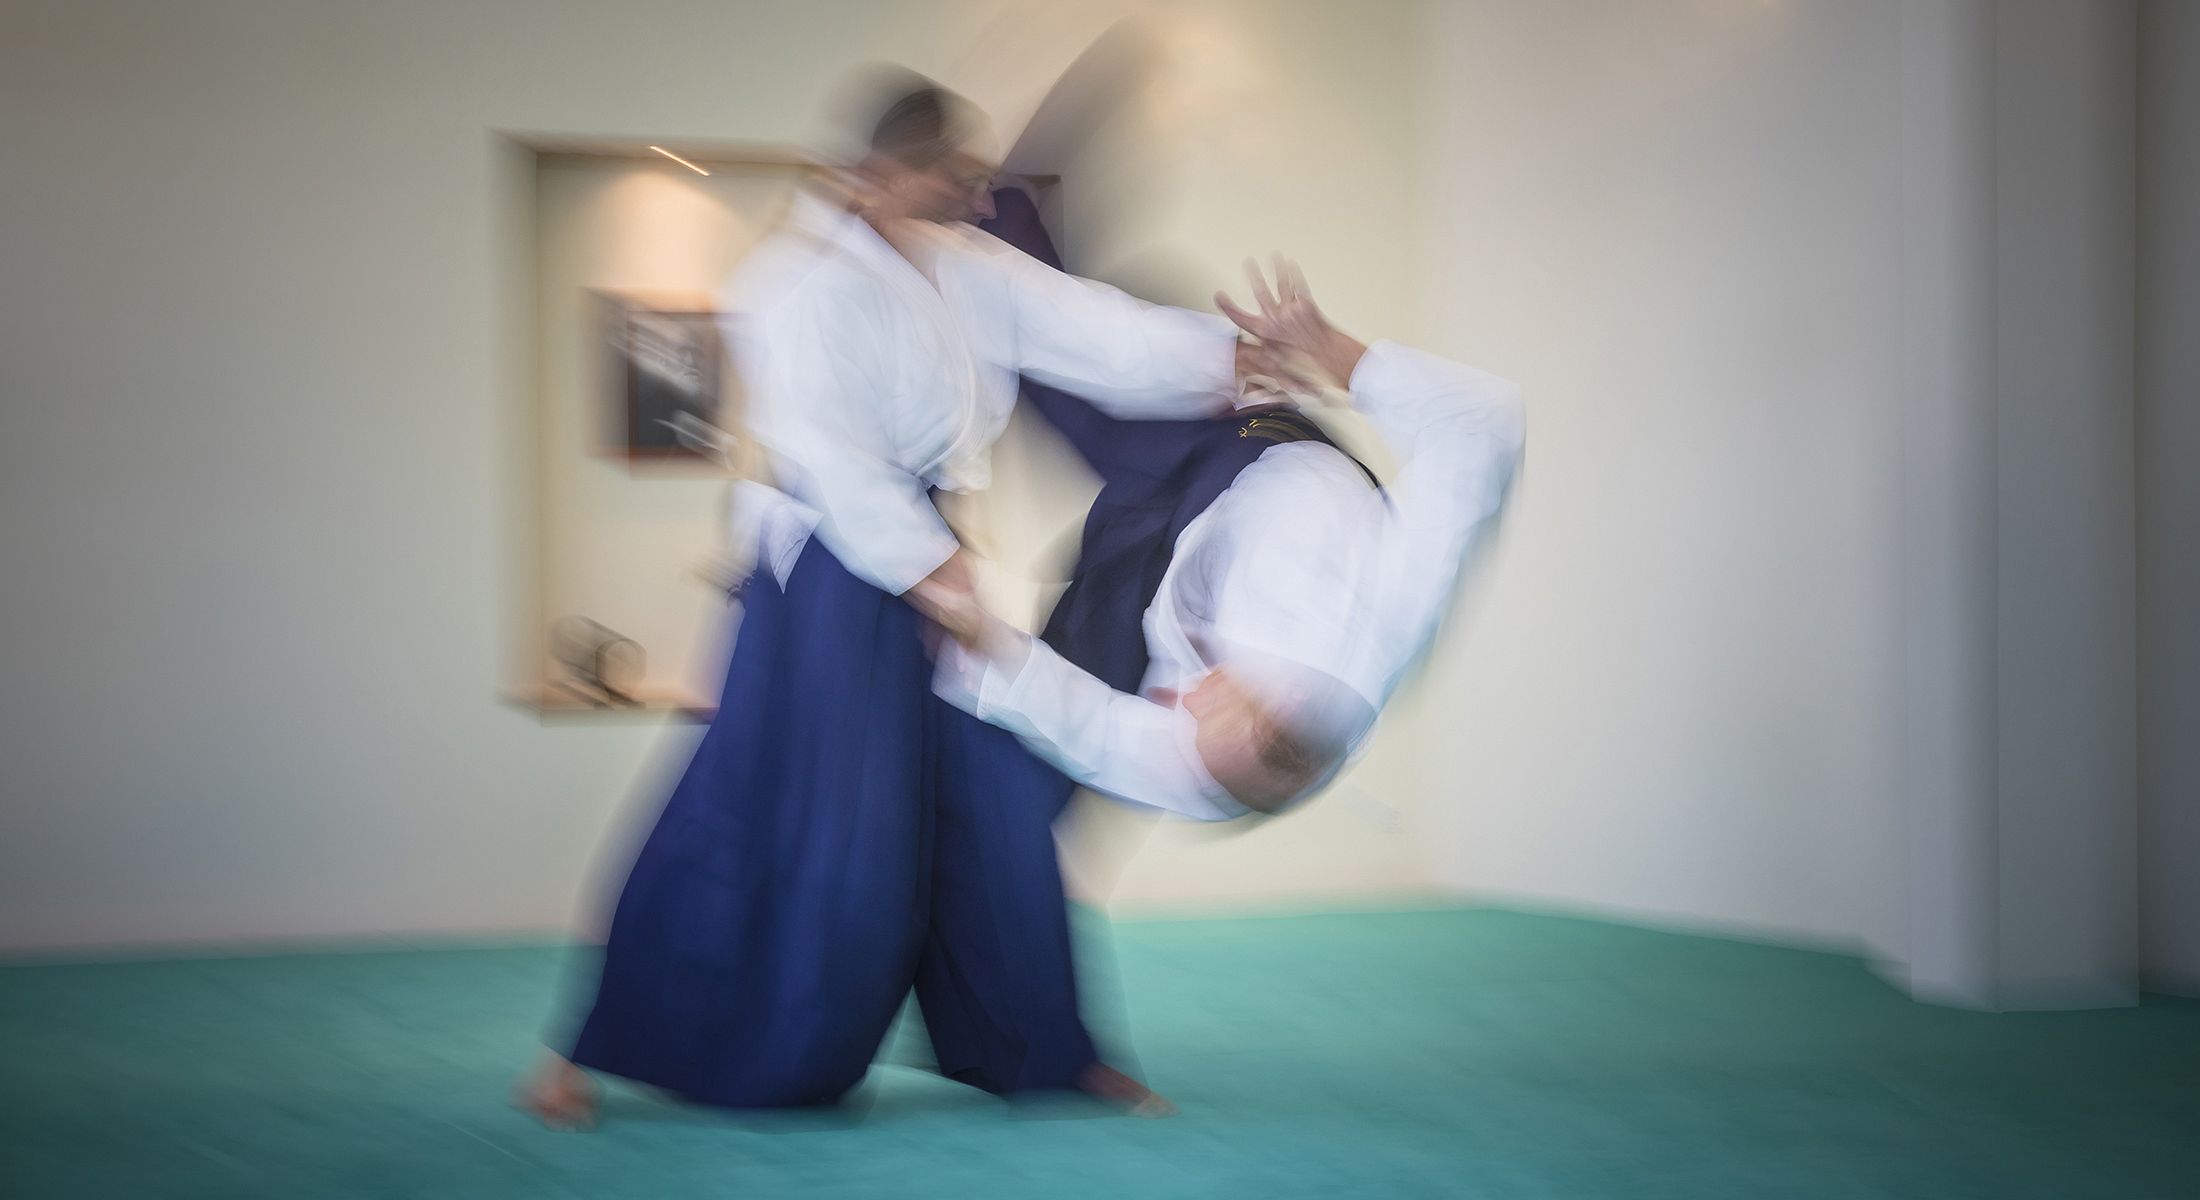 http://www.aikido-schule-bielefeld.de/wp-content/uploads/2018/12/slider07_1.jpg